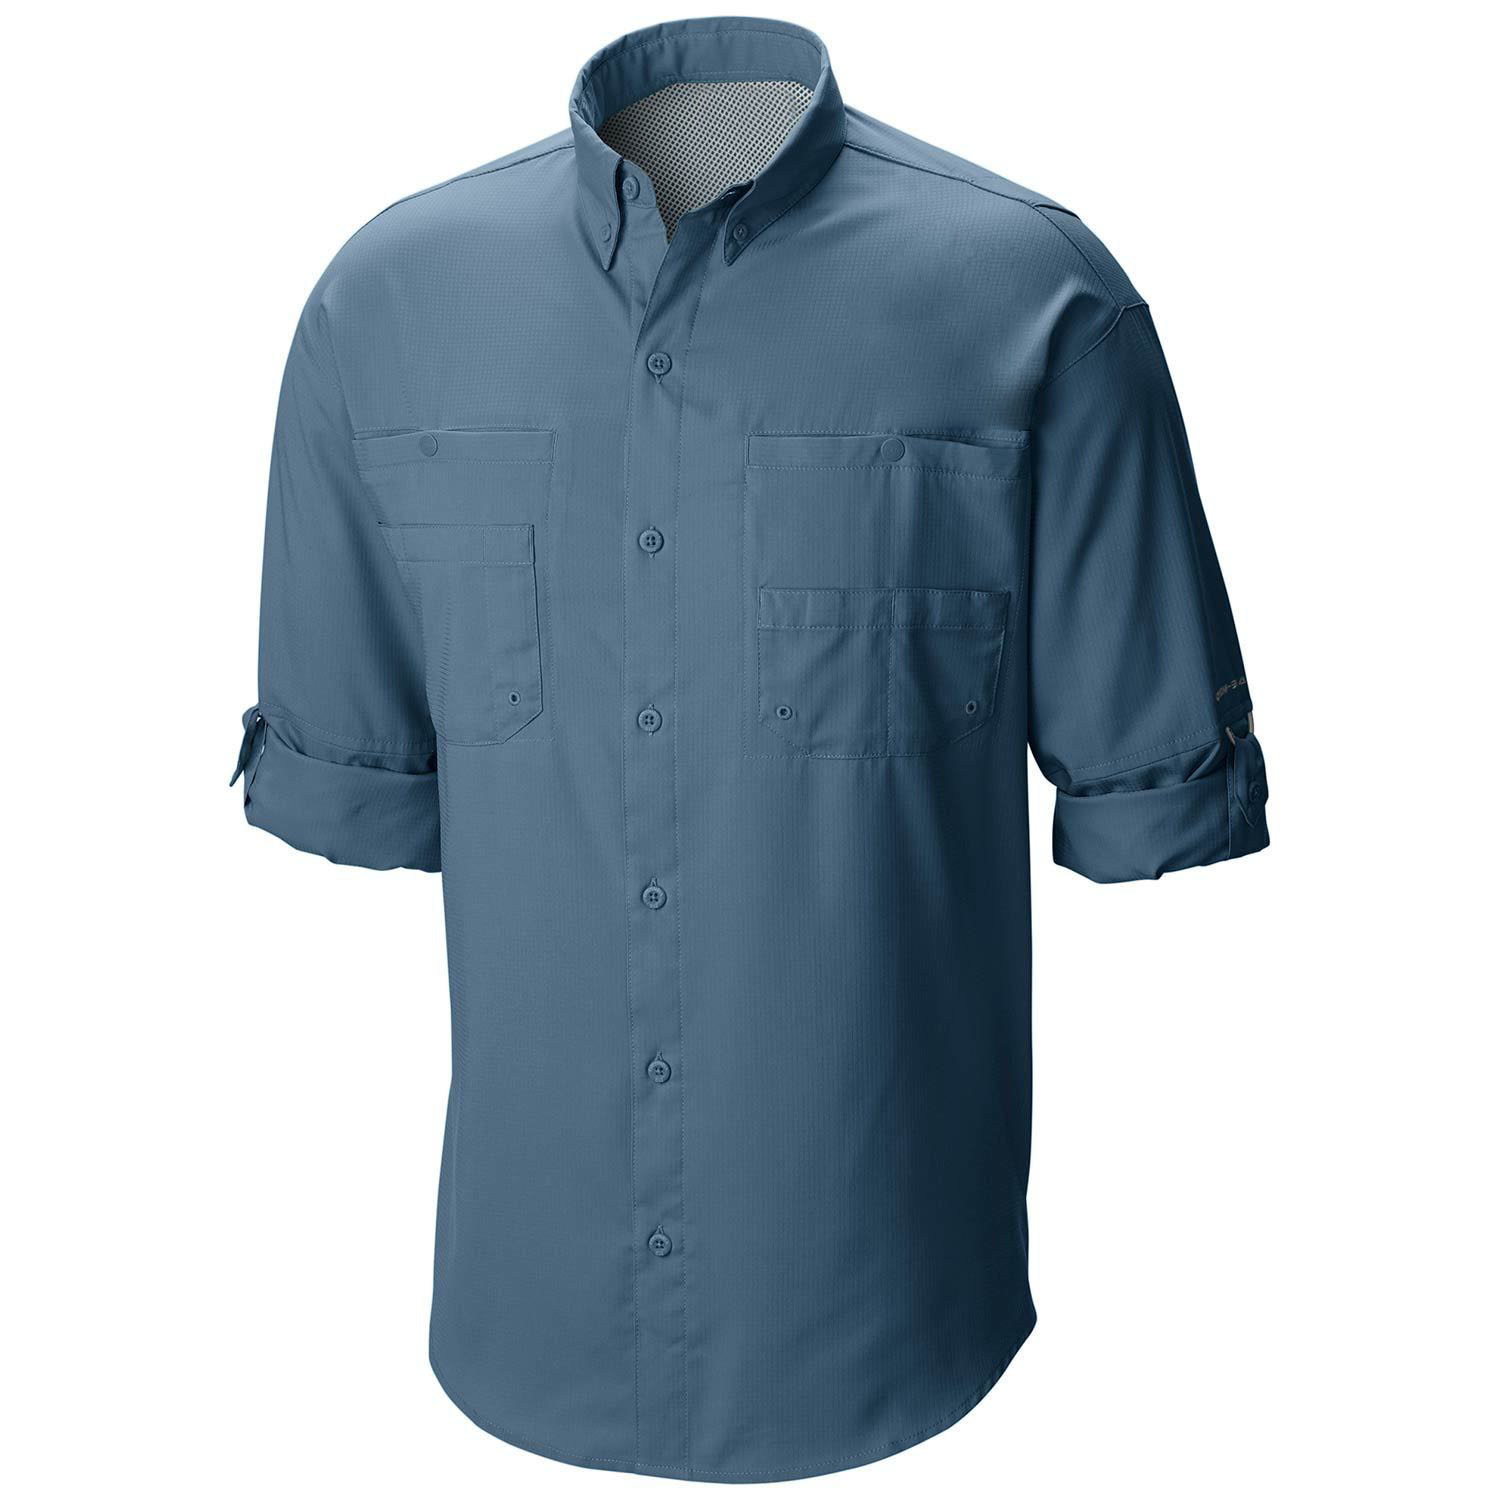  Customized multi-functional engineering shirt - Customized multi-functional engineering shirt - Continental